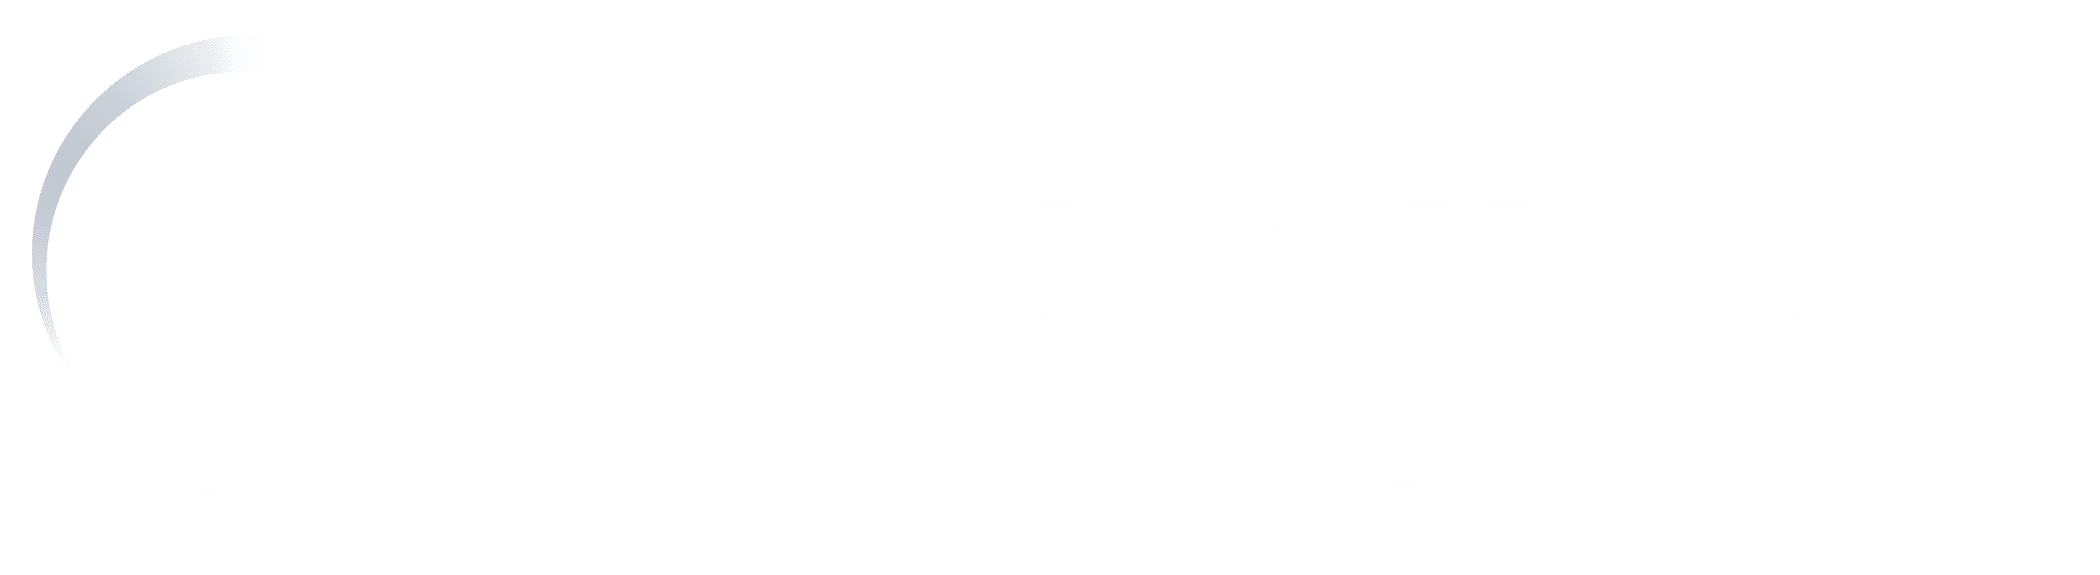 Foundation Automotive Logo in White